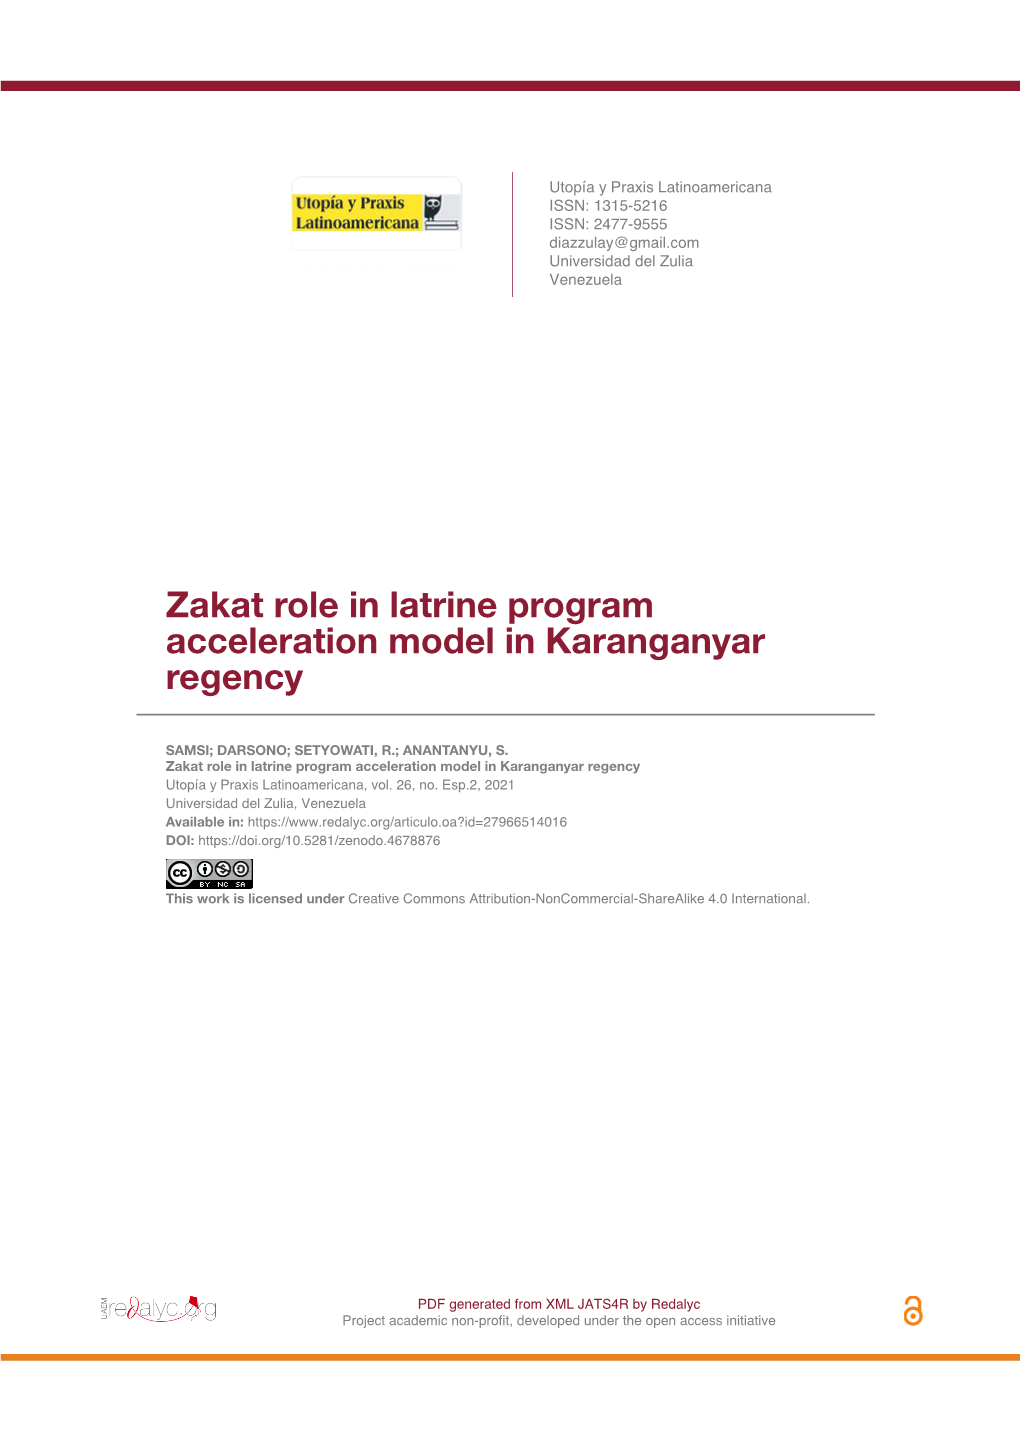 Zakat Role in Latrine Program Acceleration Model in Karanganyar Regency